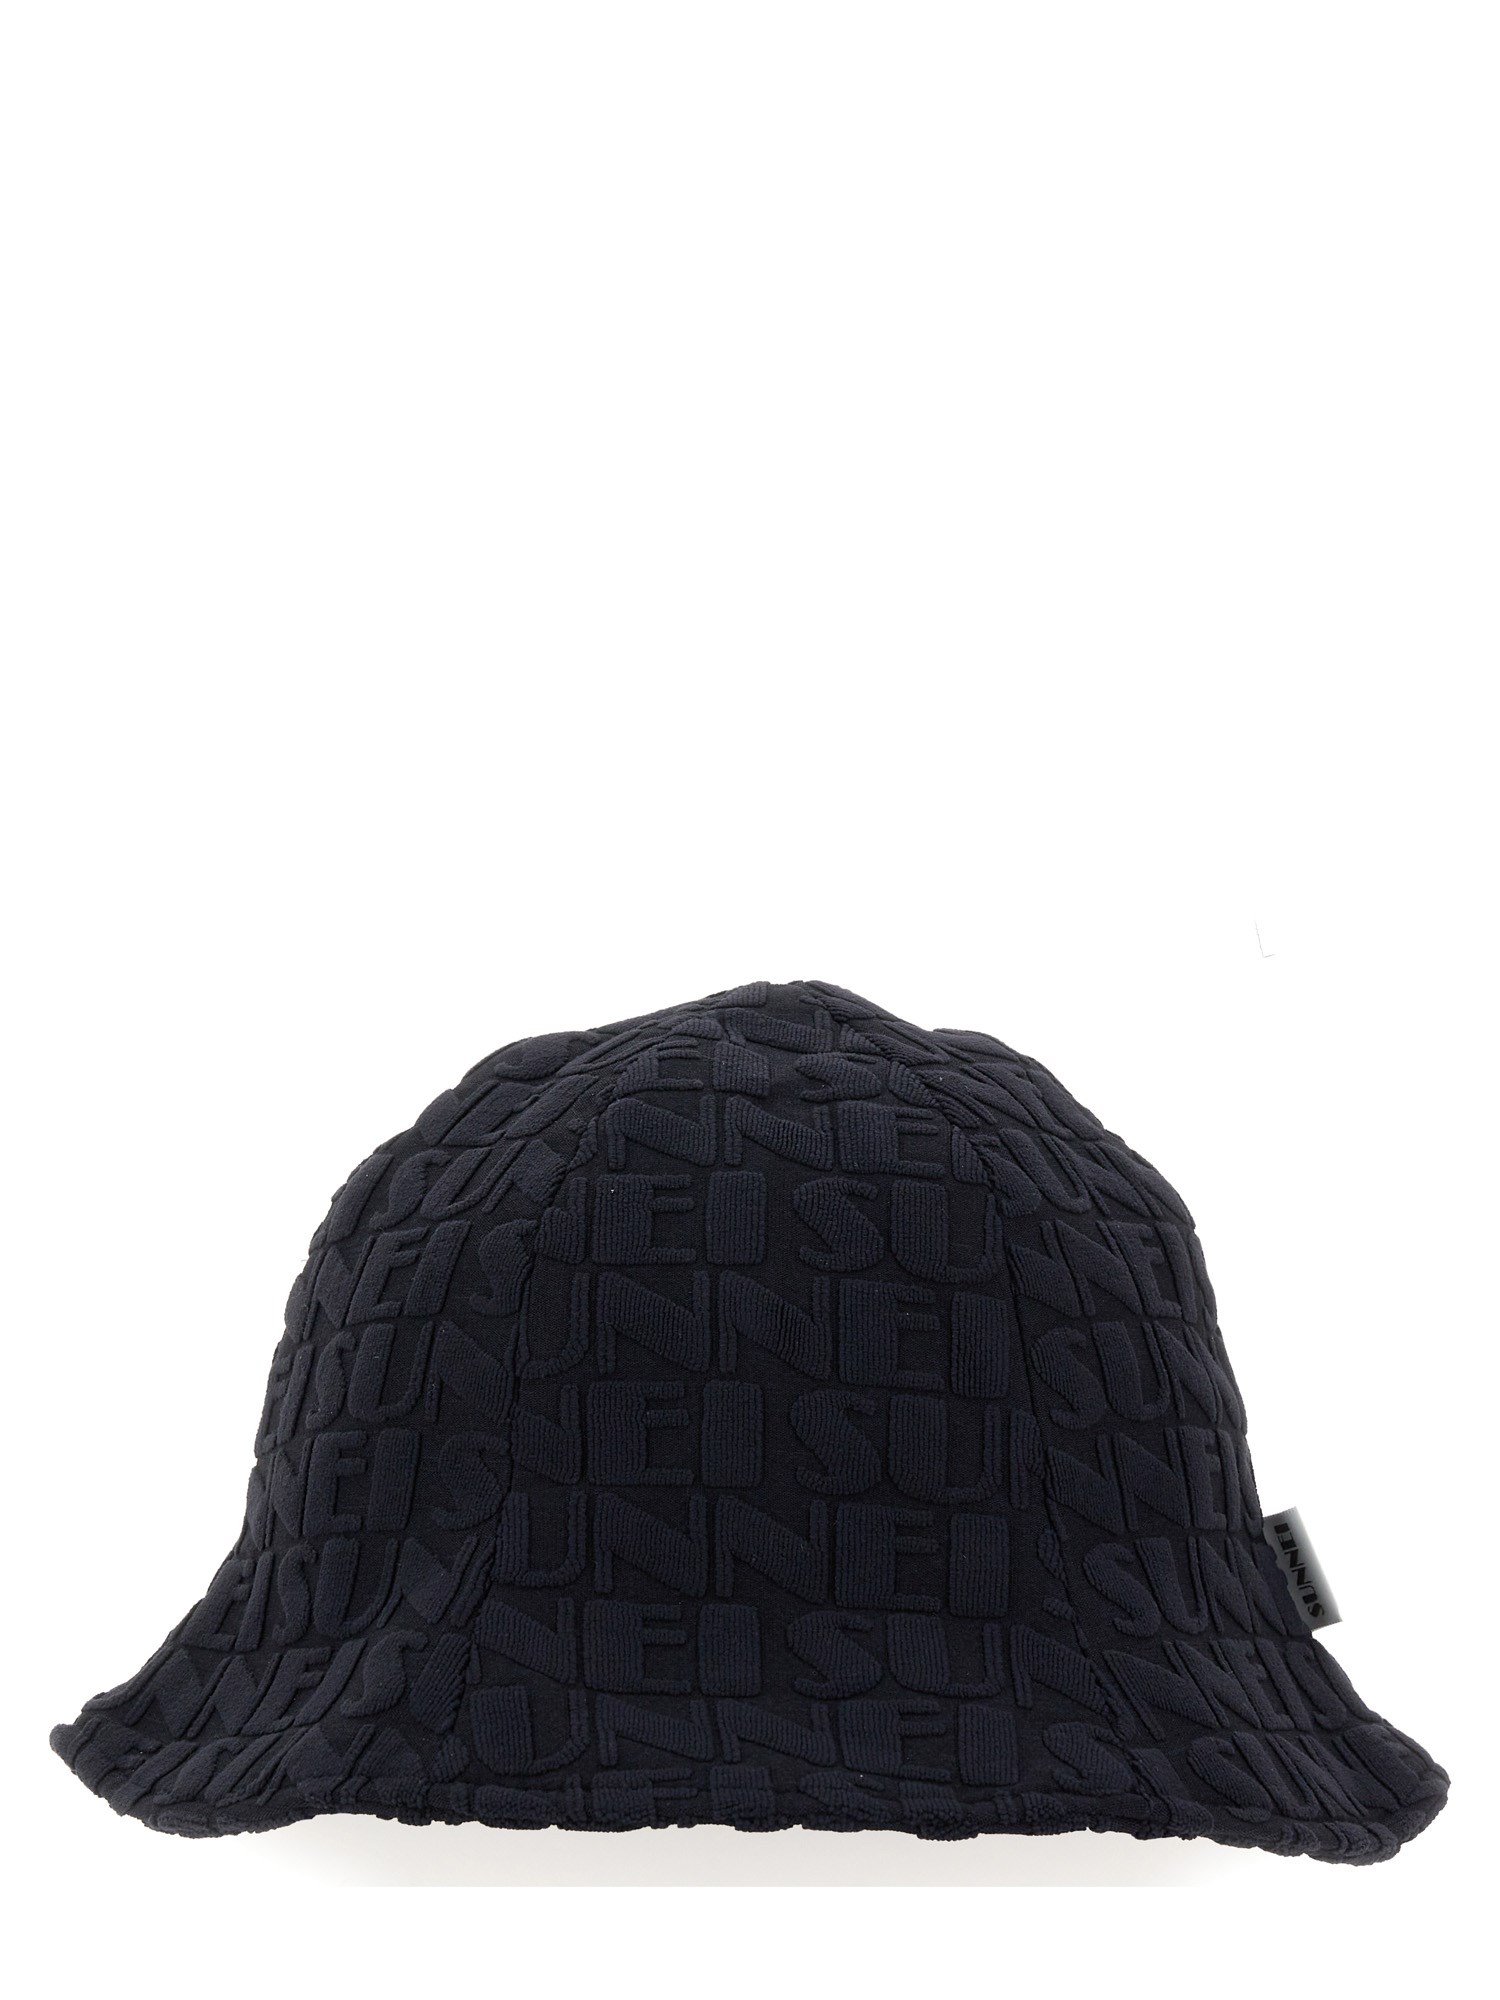 sunnei bucket hat with logo pattern